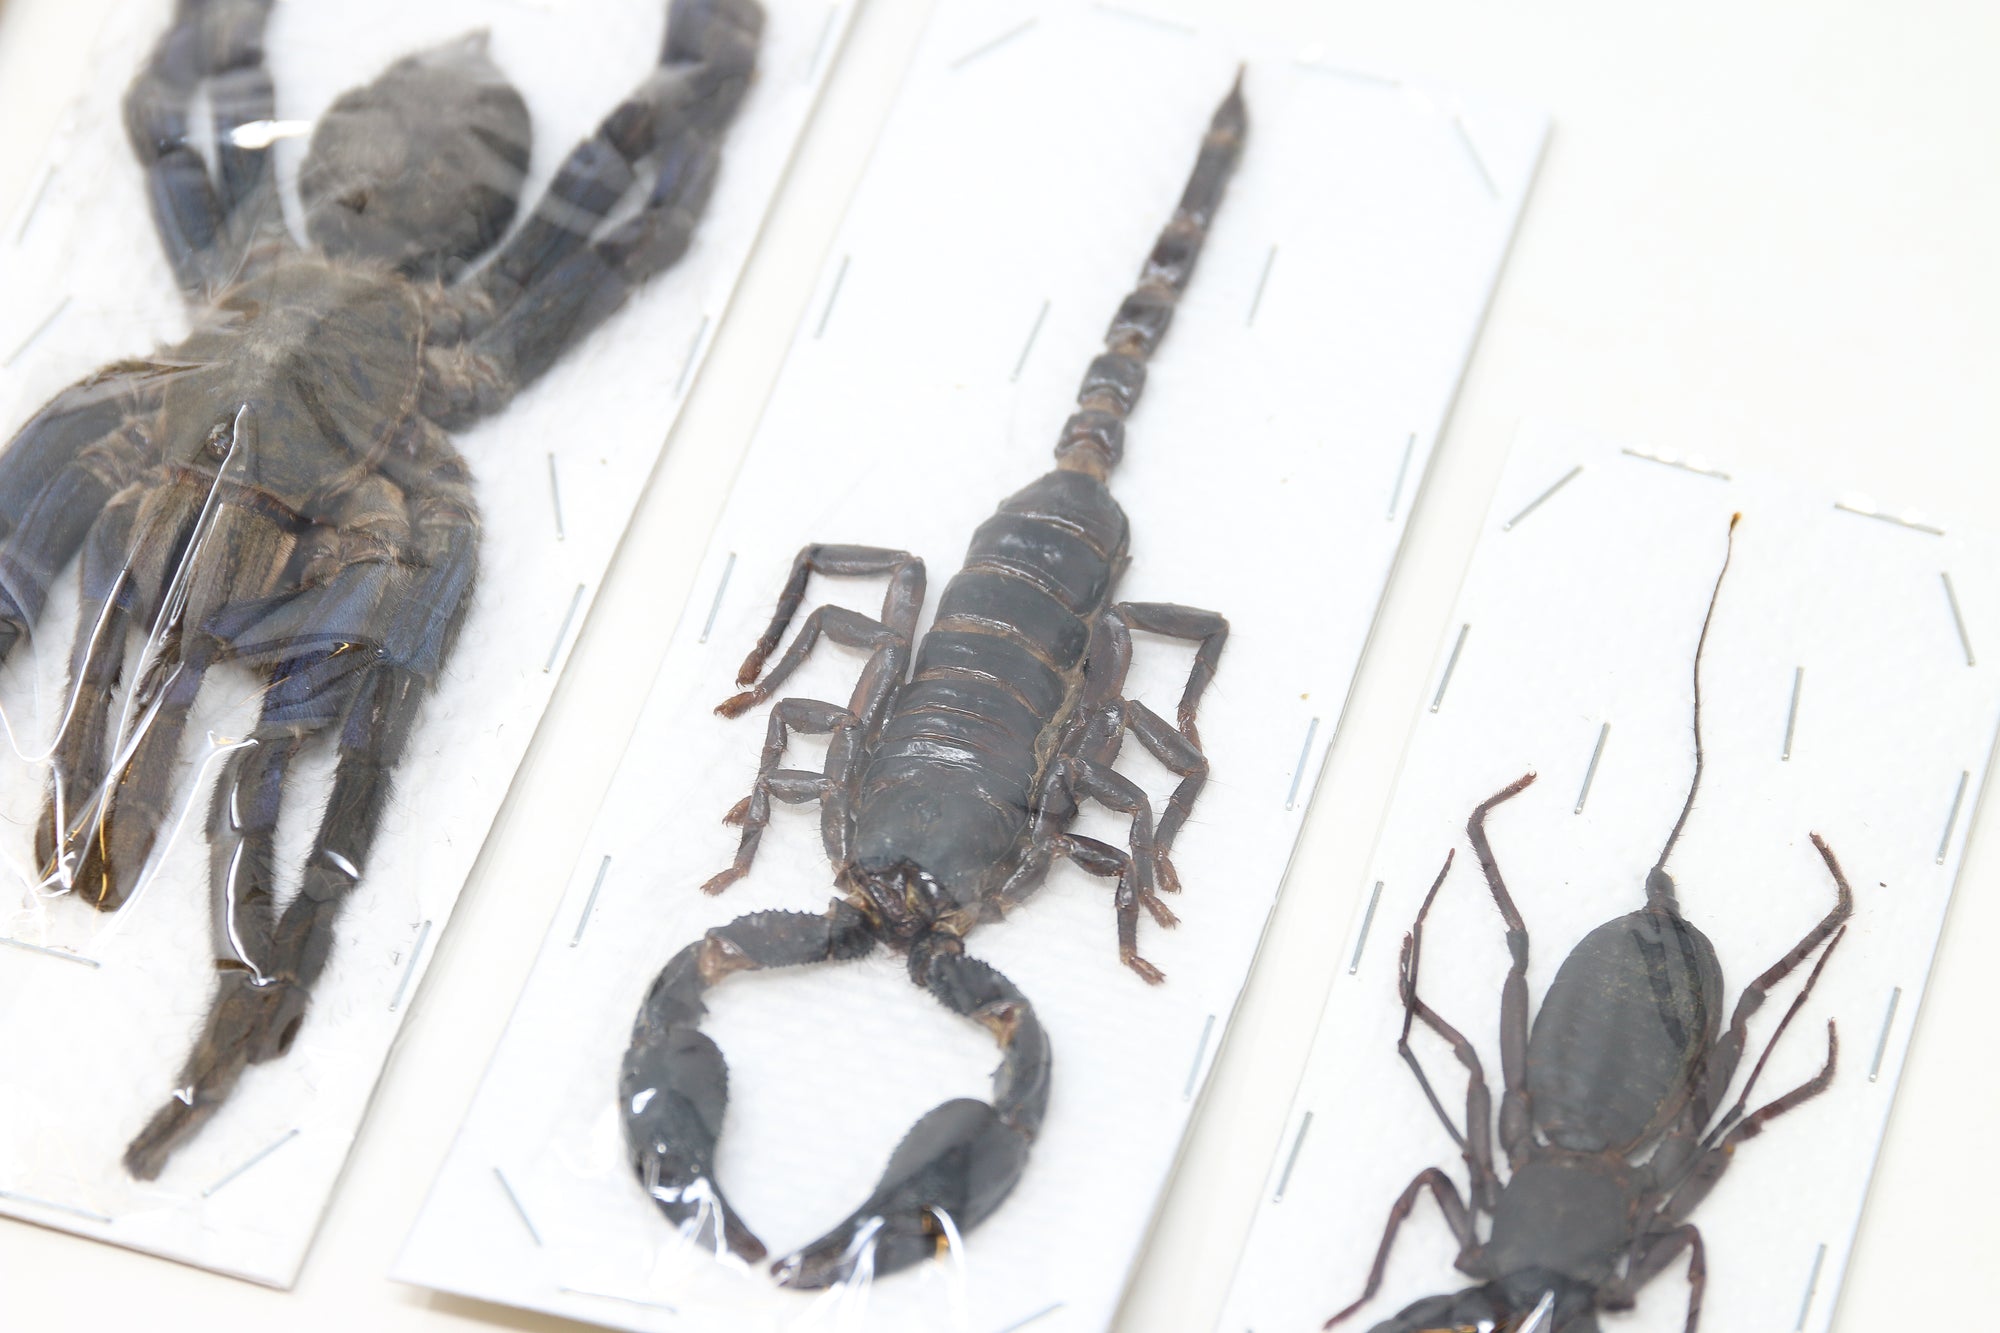 Arachnid Collection x Blue Bird-EatingTarantula, Giant Forest Scorpion, Giant Centipede Scolopendra, Whip Scorpion | A1 Taxidermy Specimens